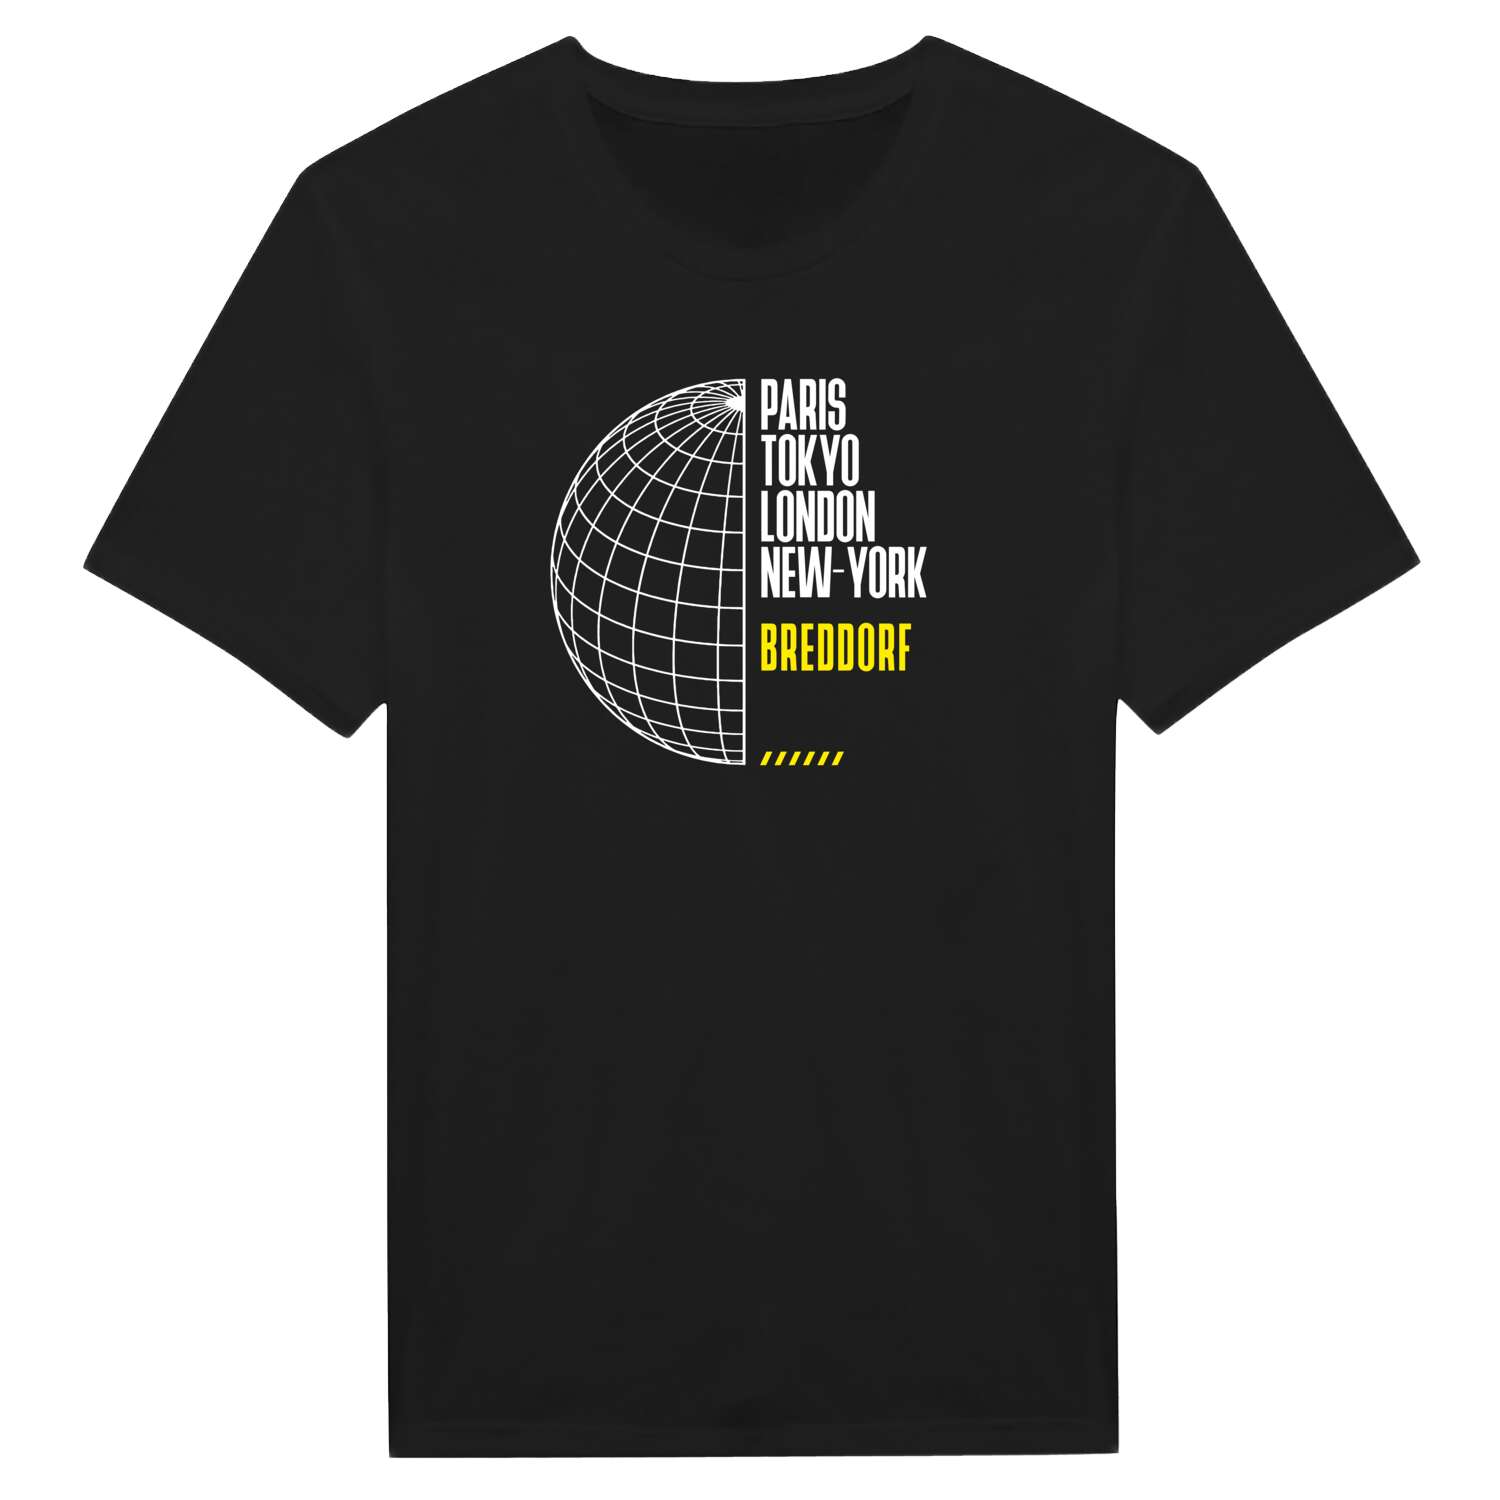 Breddorf T-Shirt »Paris Tokyo London«